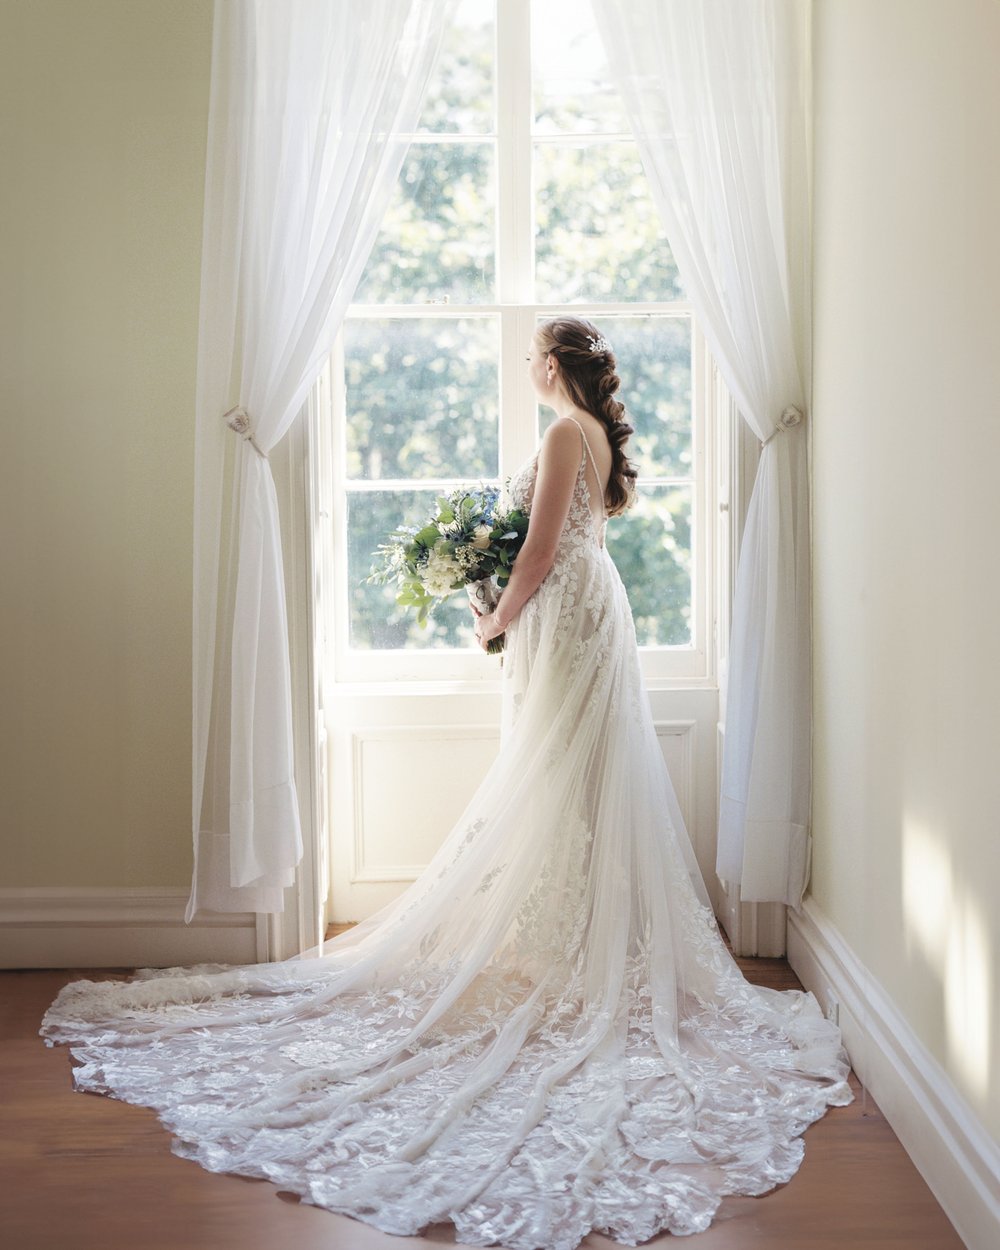 Brecknock-Hall-Bridal-Portrait-Wedding-Photography.jpg